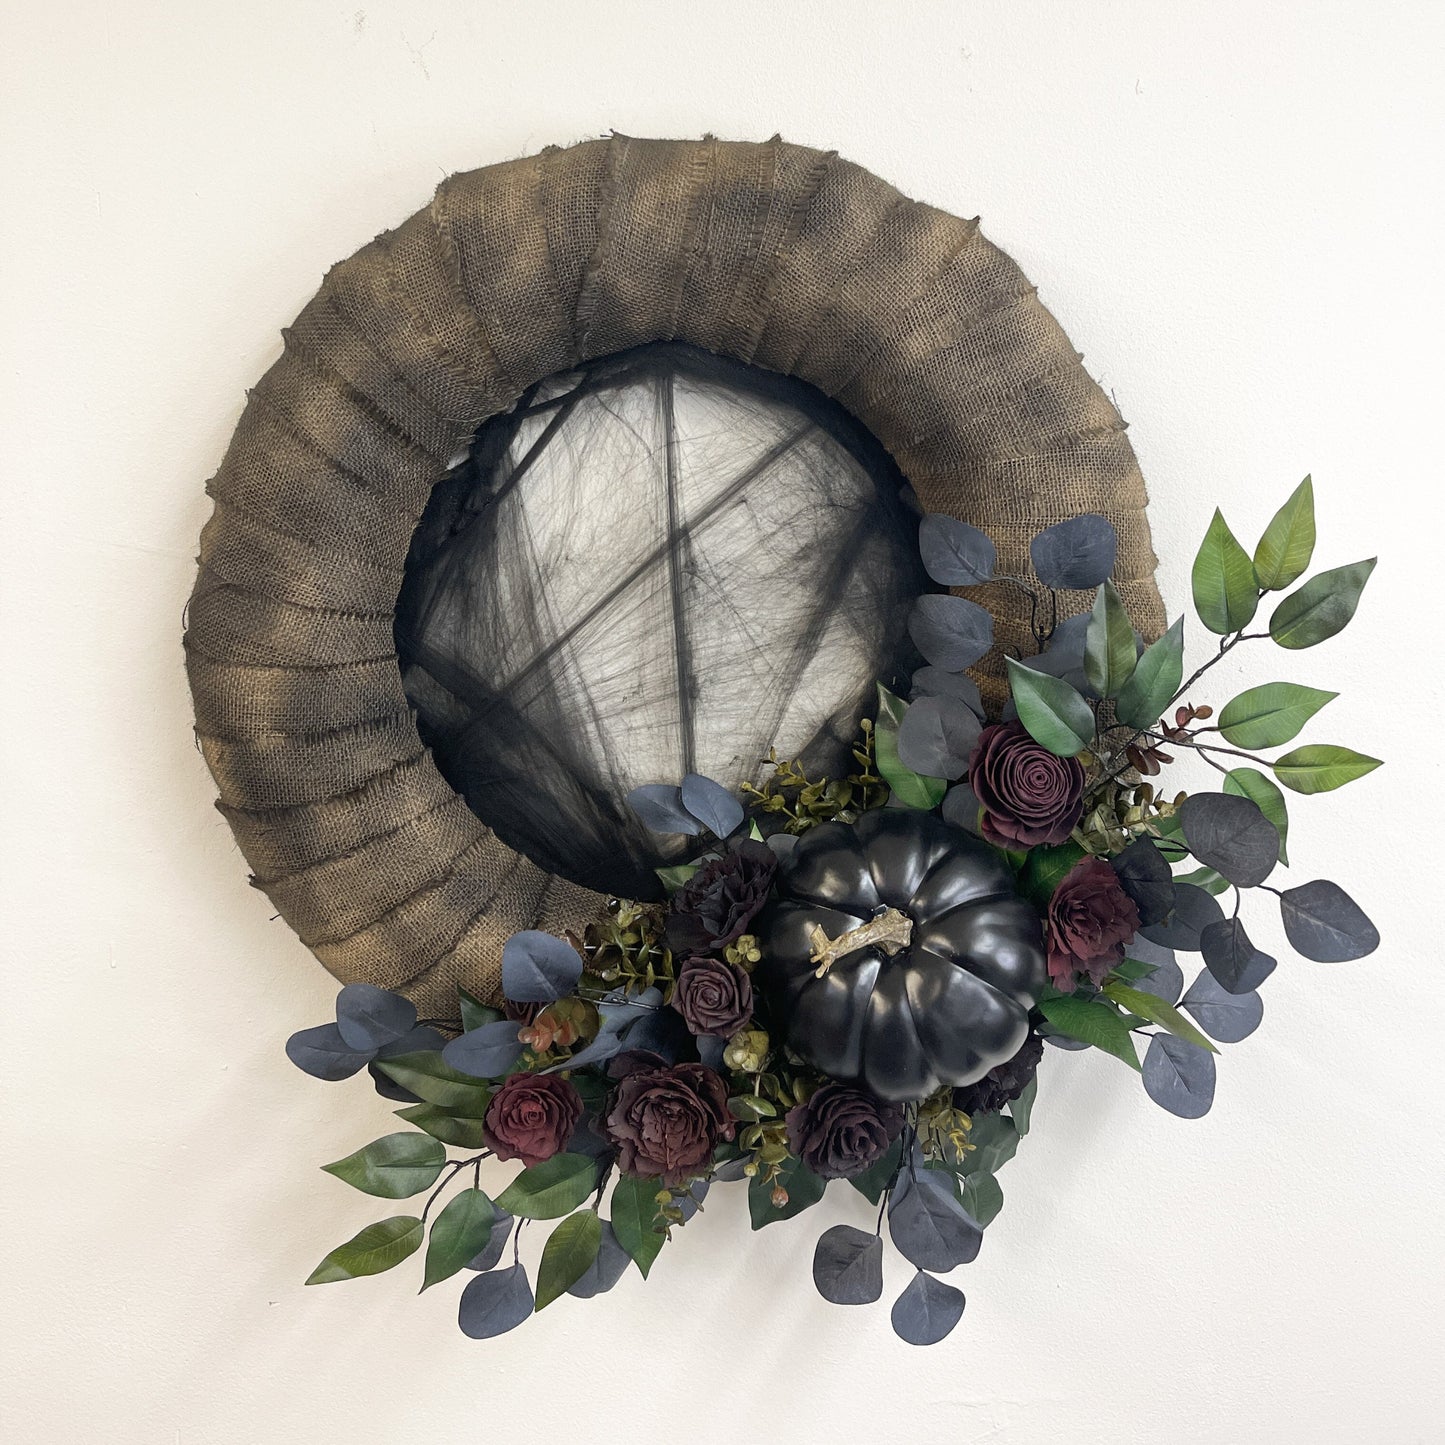 Wood flower wreath with black cobwebs, maroon flowers, black pumpkin, and black and green greenery.